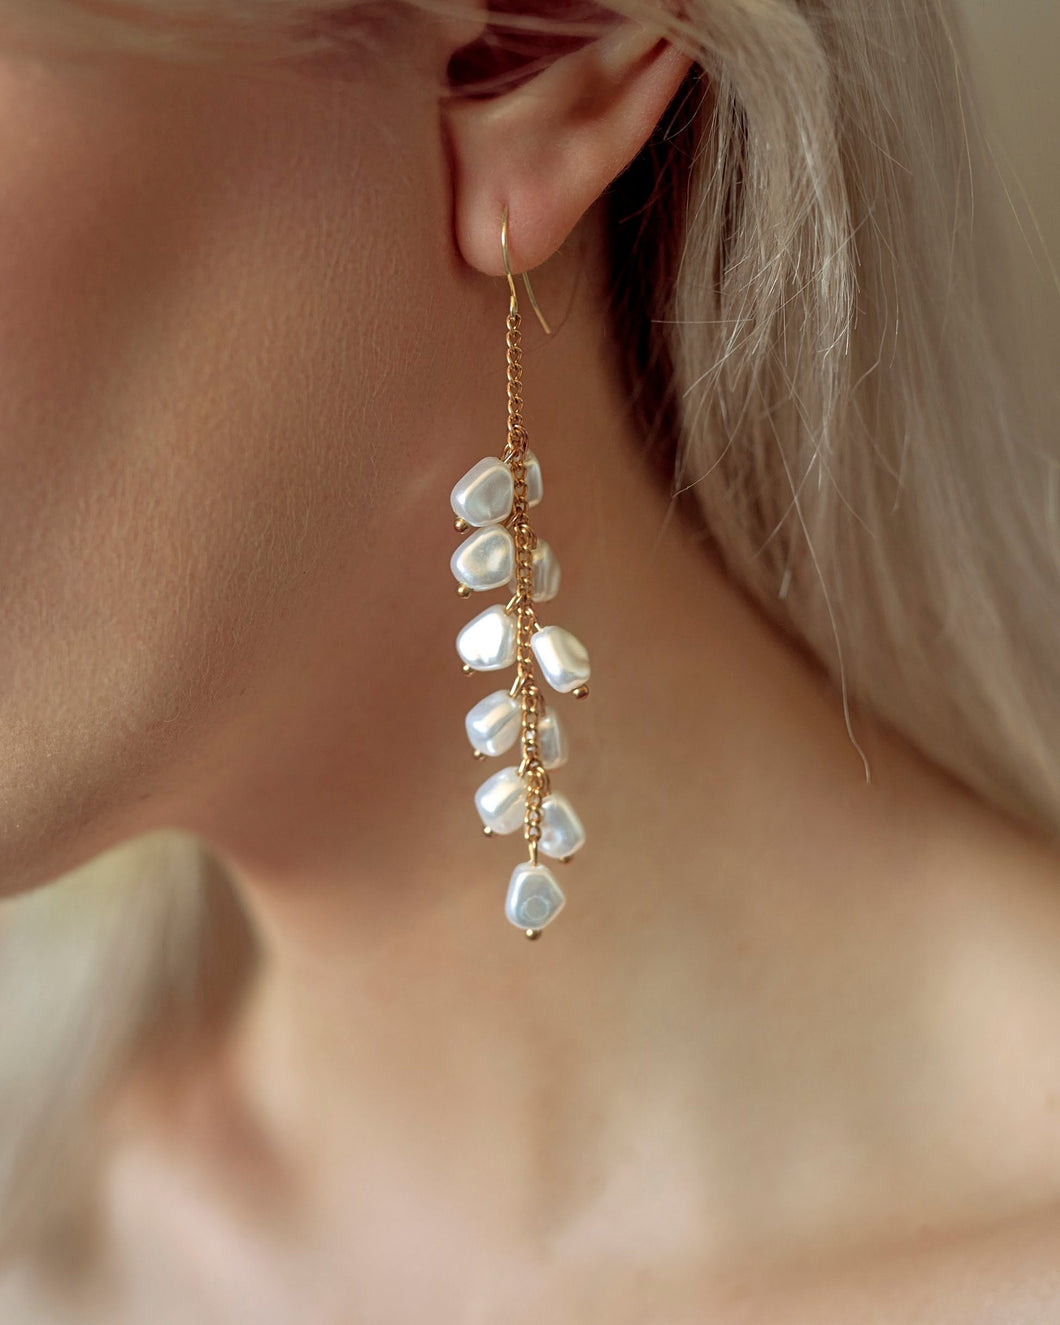 MEGAN -  Dangling baroque pearl earrings vintage street style chandelier statement cluster pearl boho bride wedding bridesmaid gift 925 gold